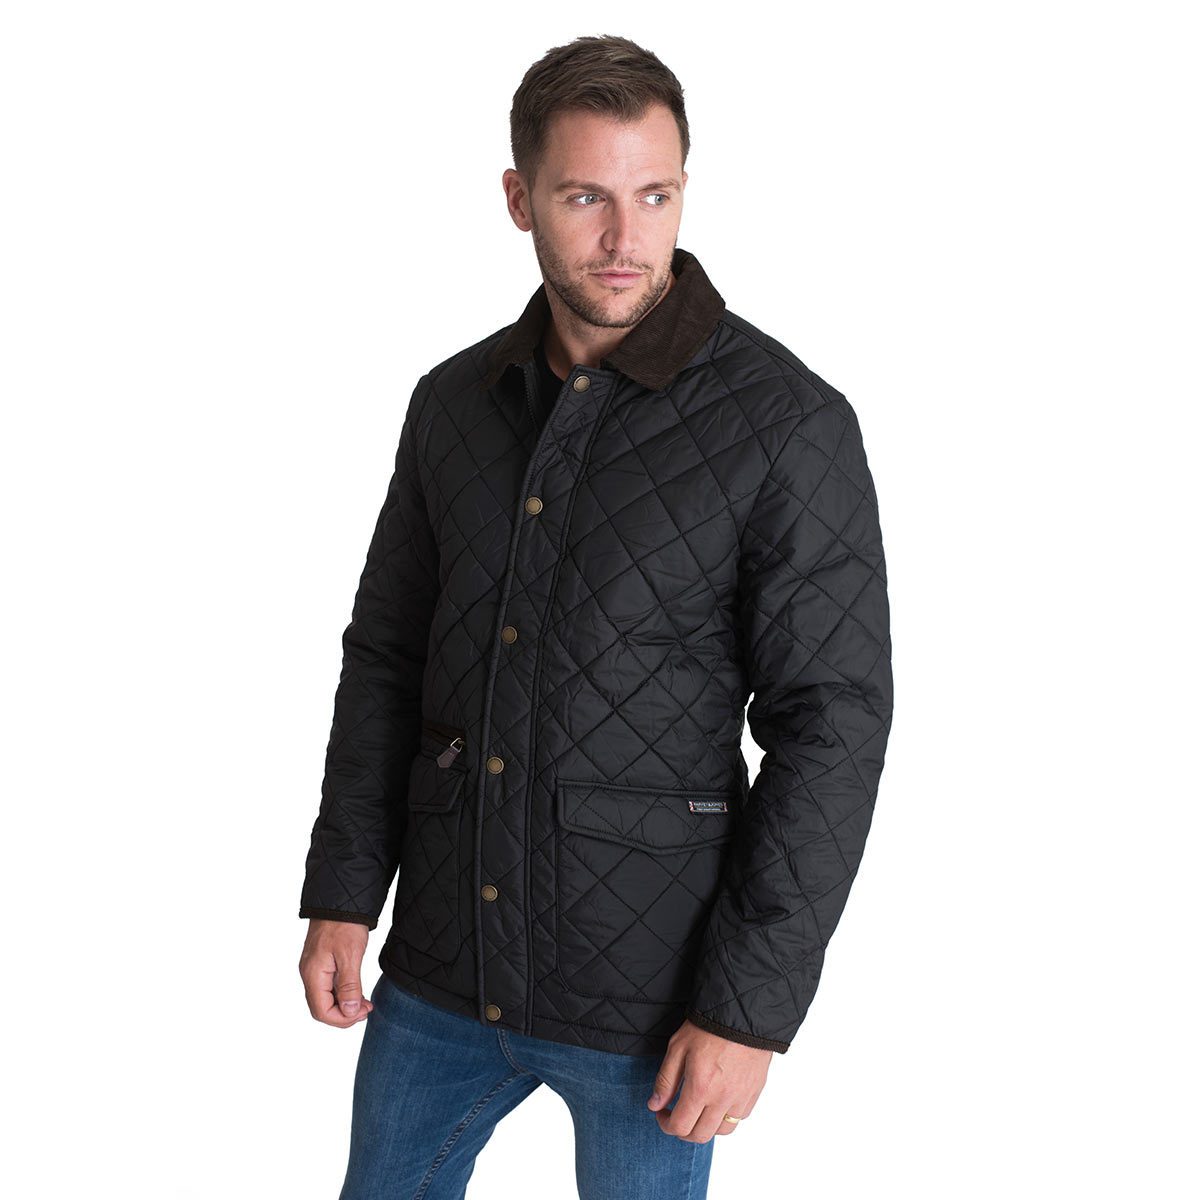 Harvey & Jones Harwood Men's Jacket in Black, Large | Costco UK